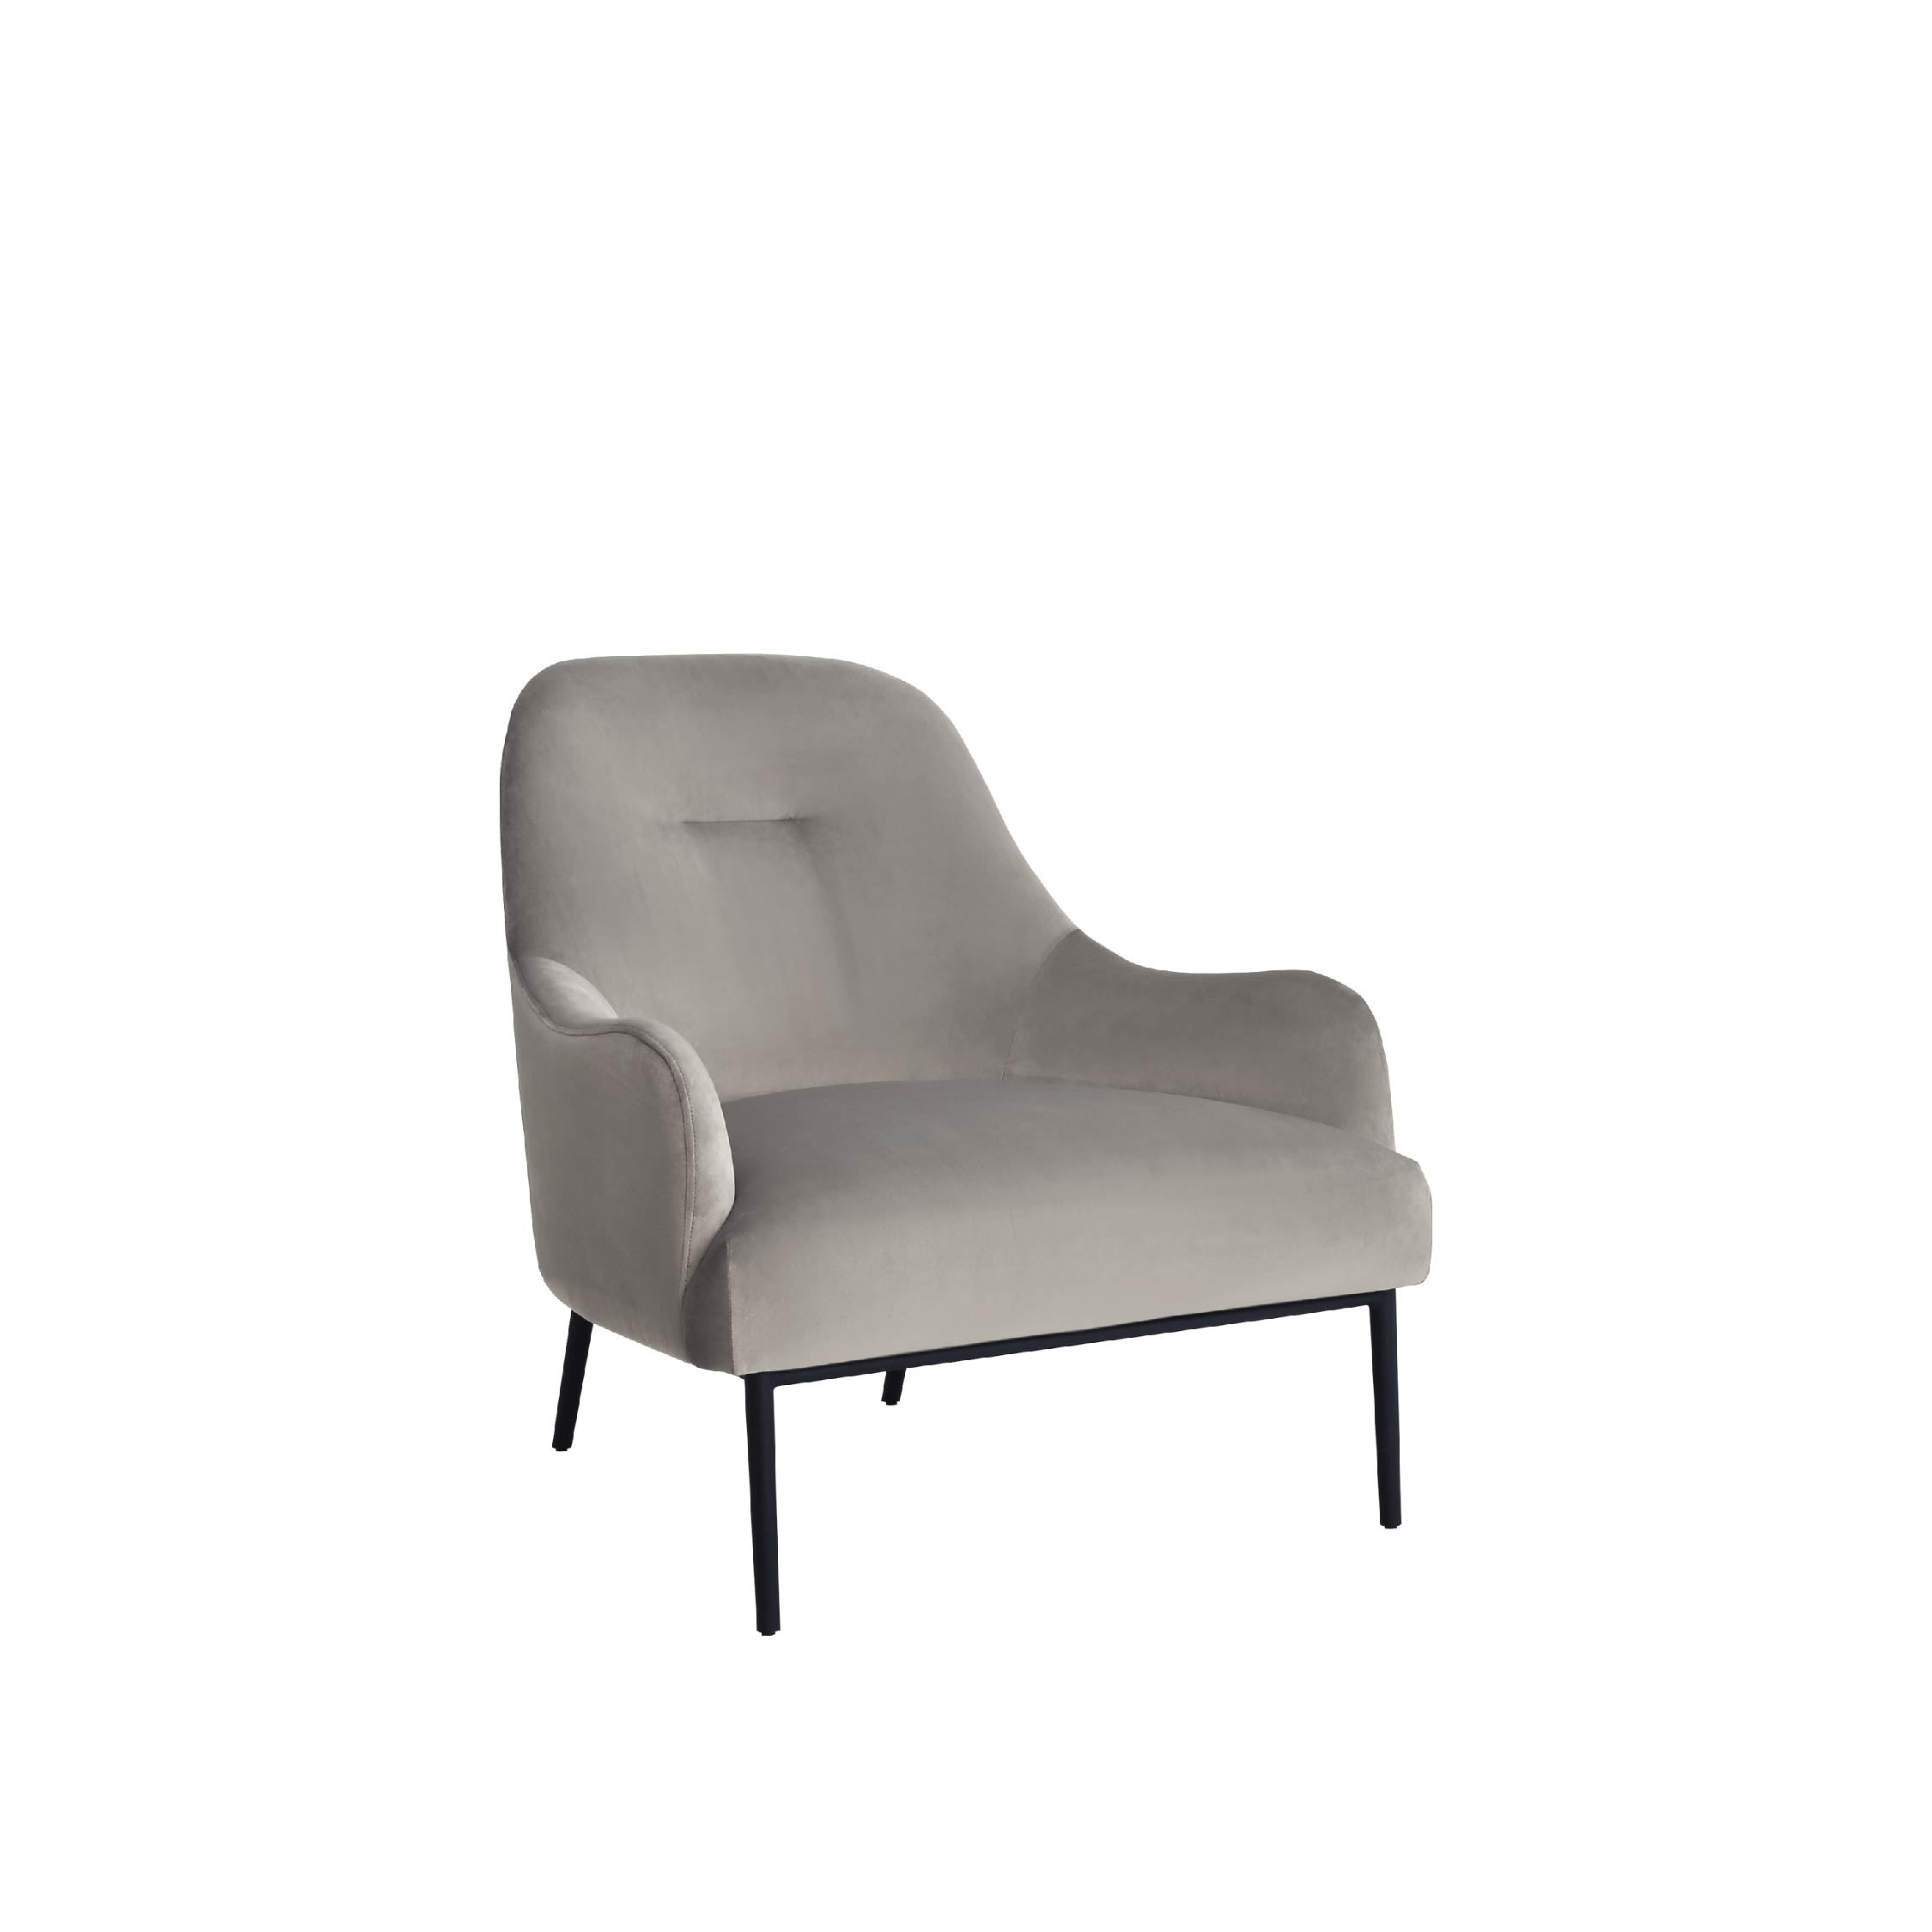 GARIS Lounge Chair